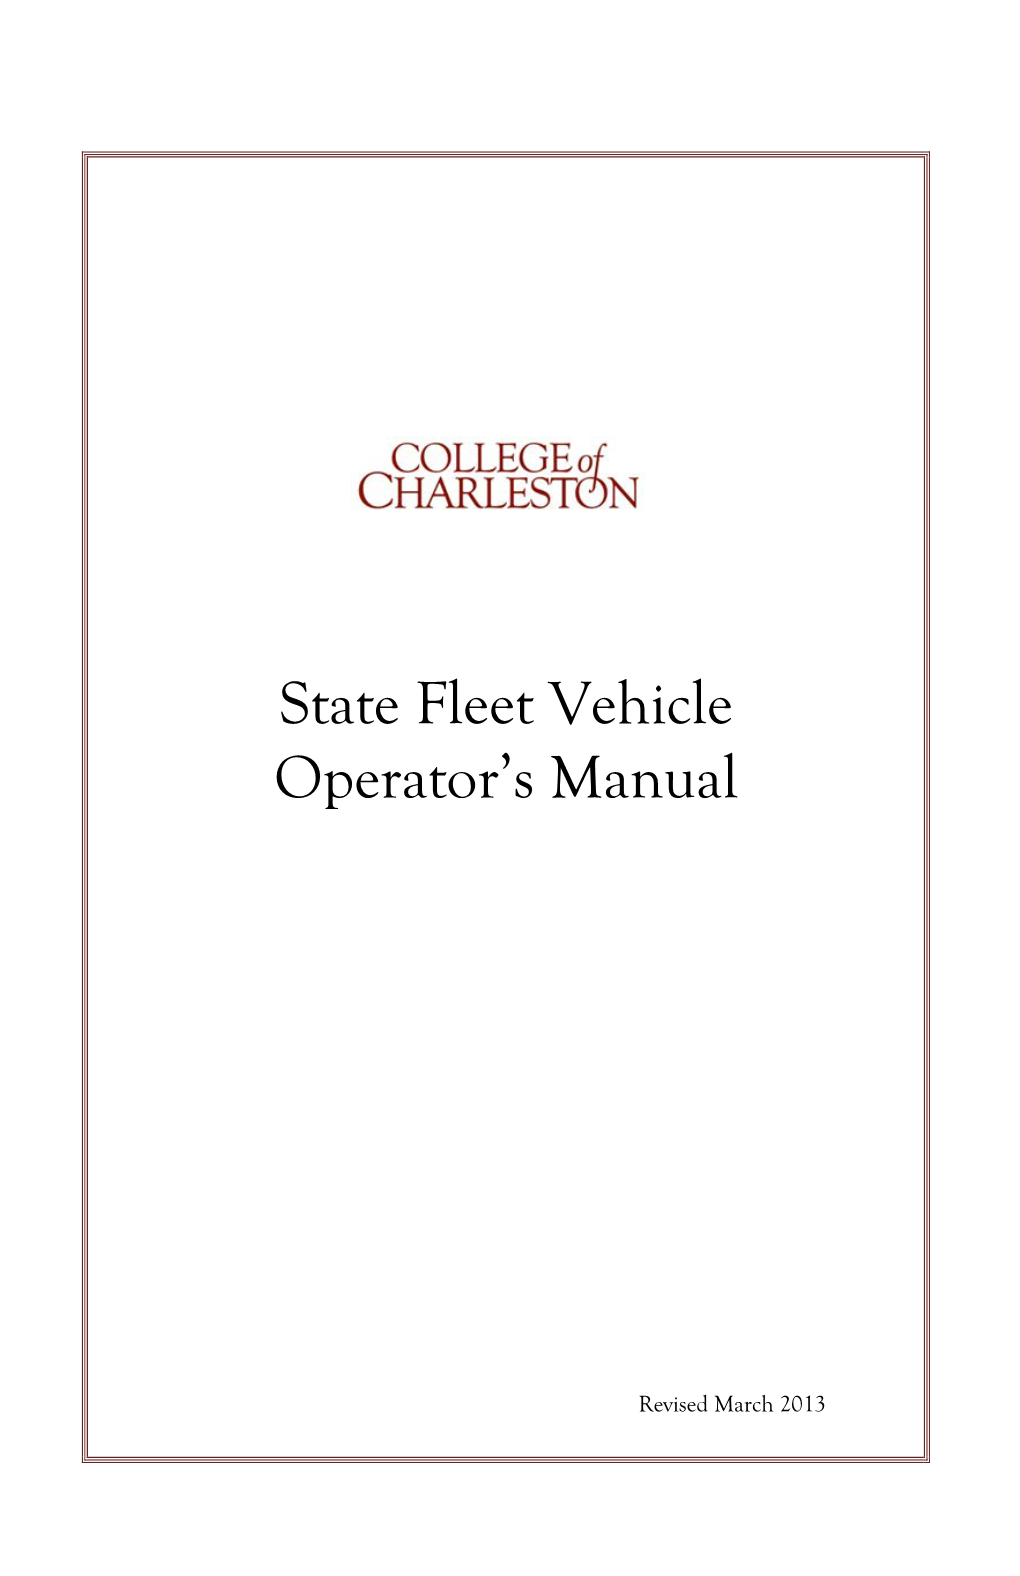 State Fleet Vehicle Operator's Manual